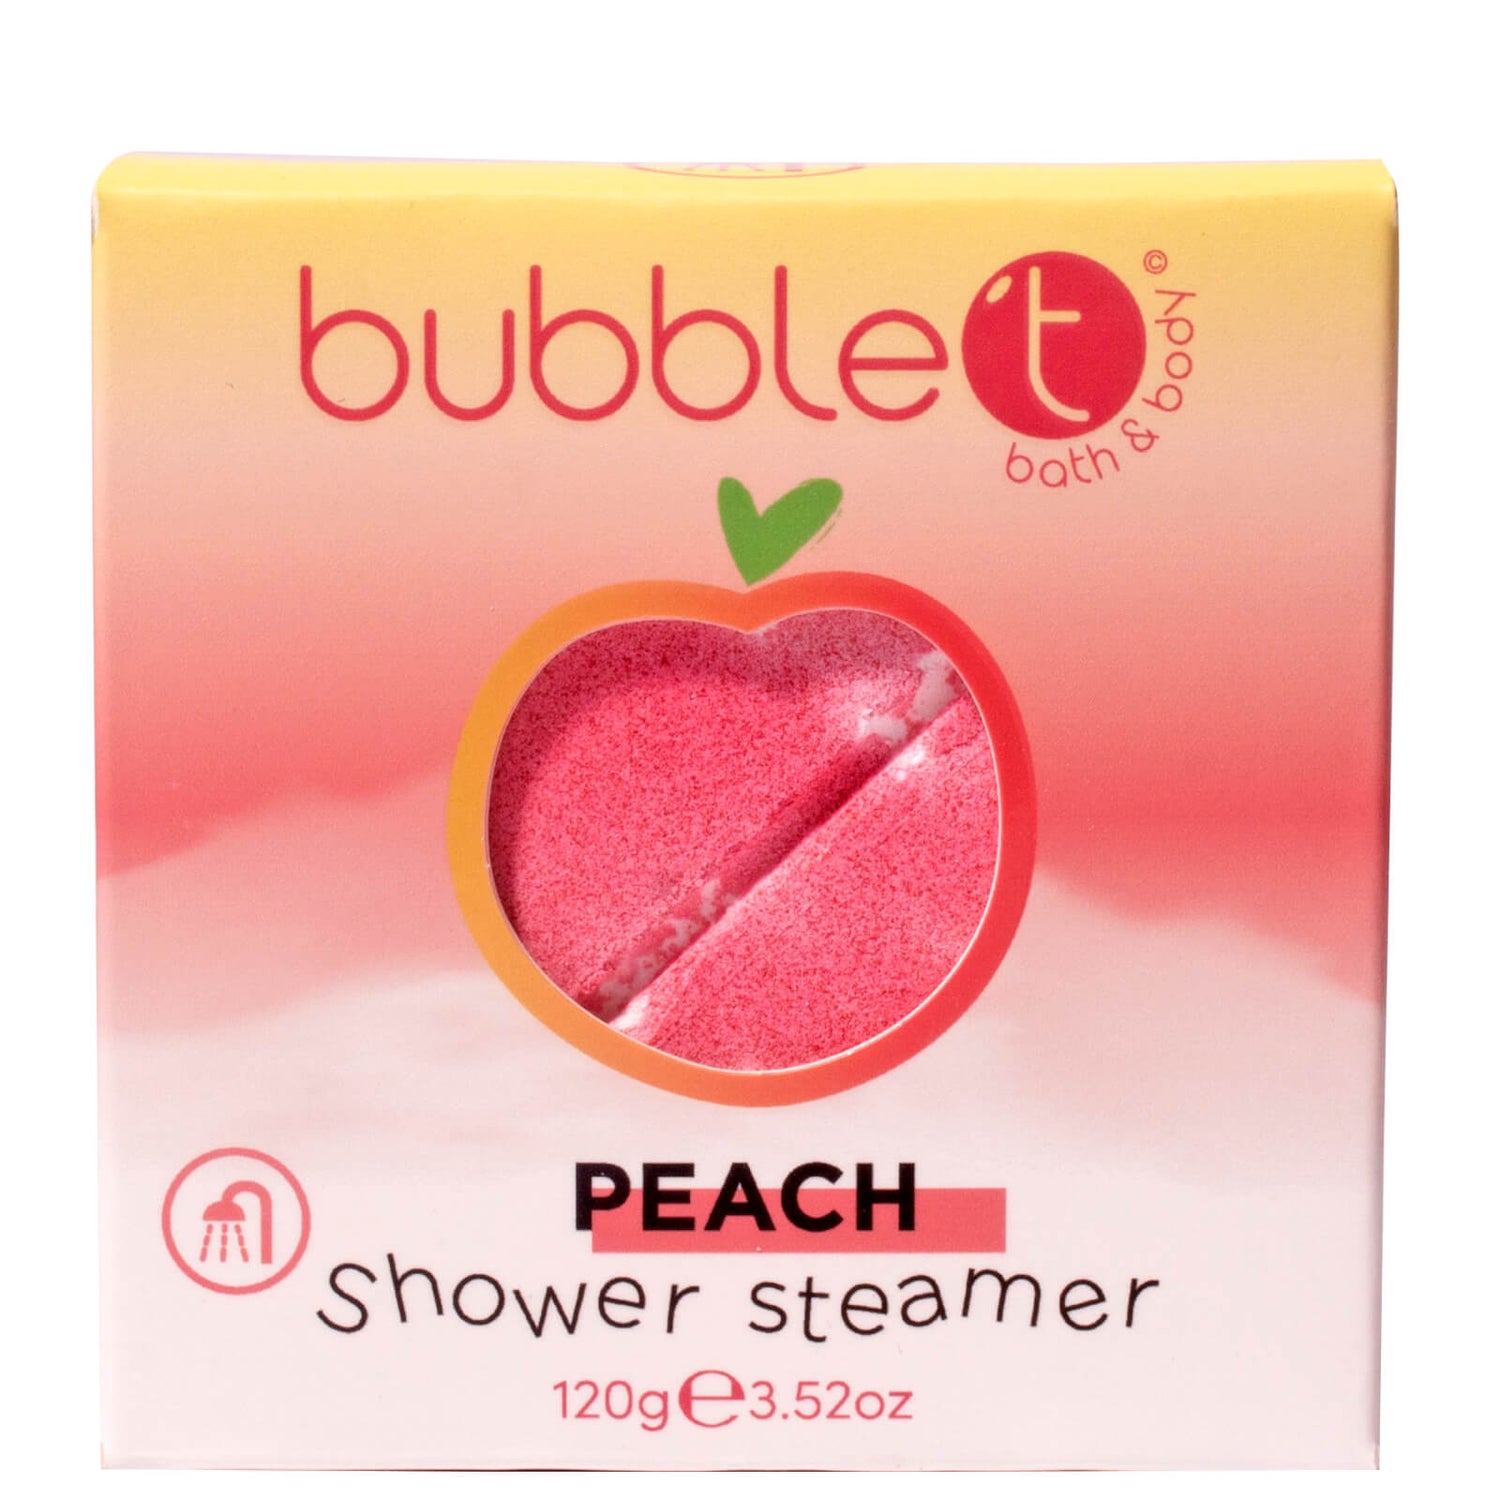 Bubble T Shower Steamer - Peach